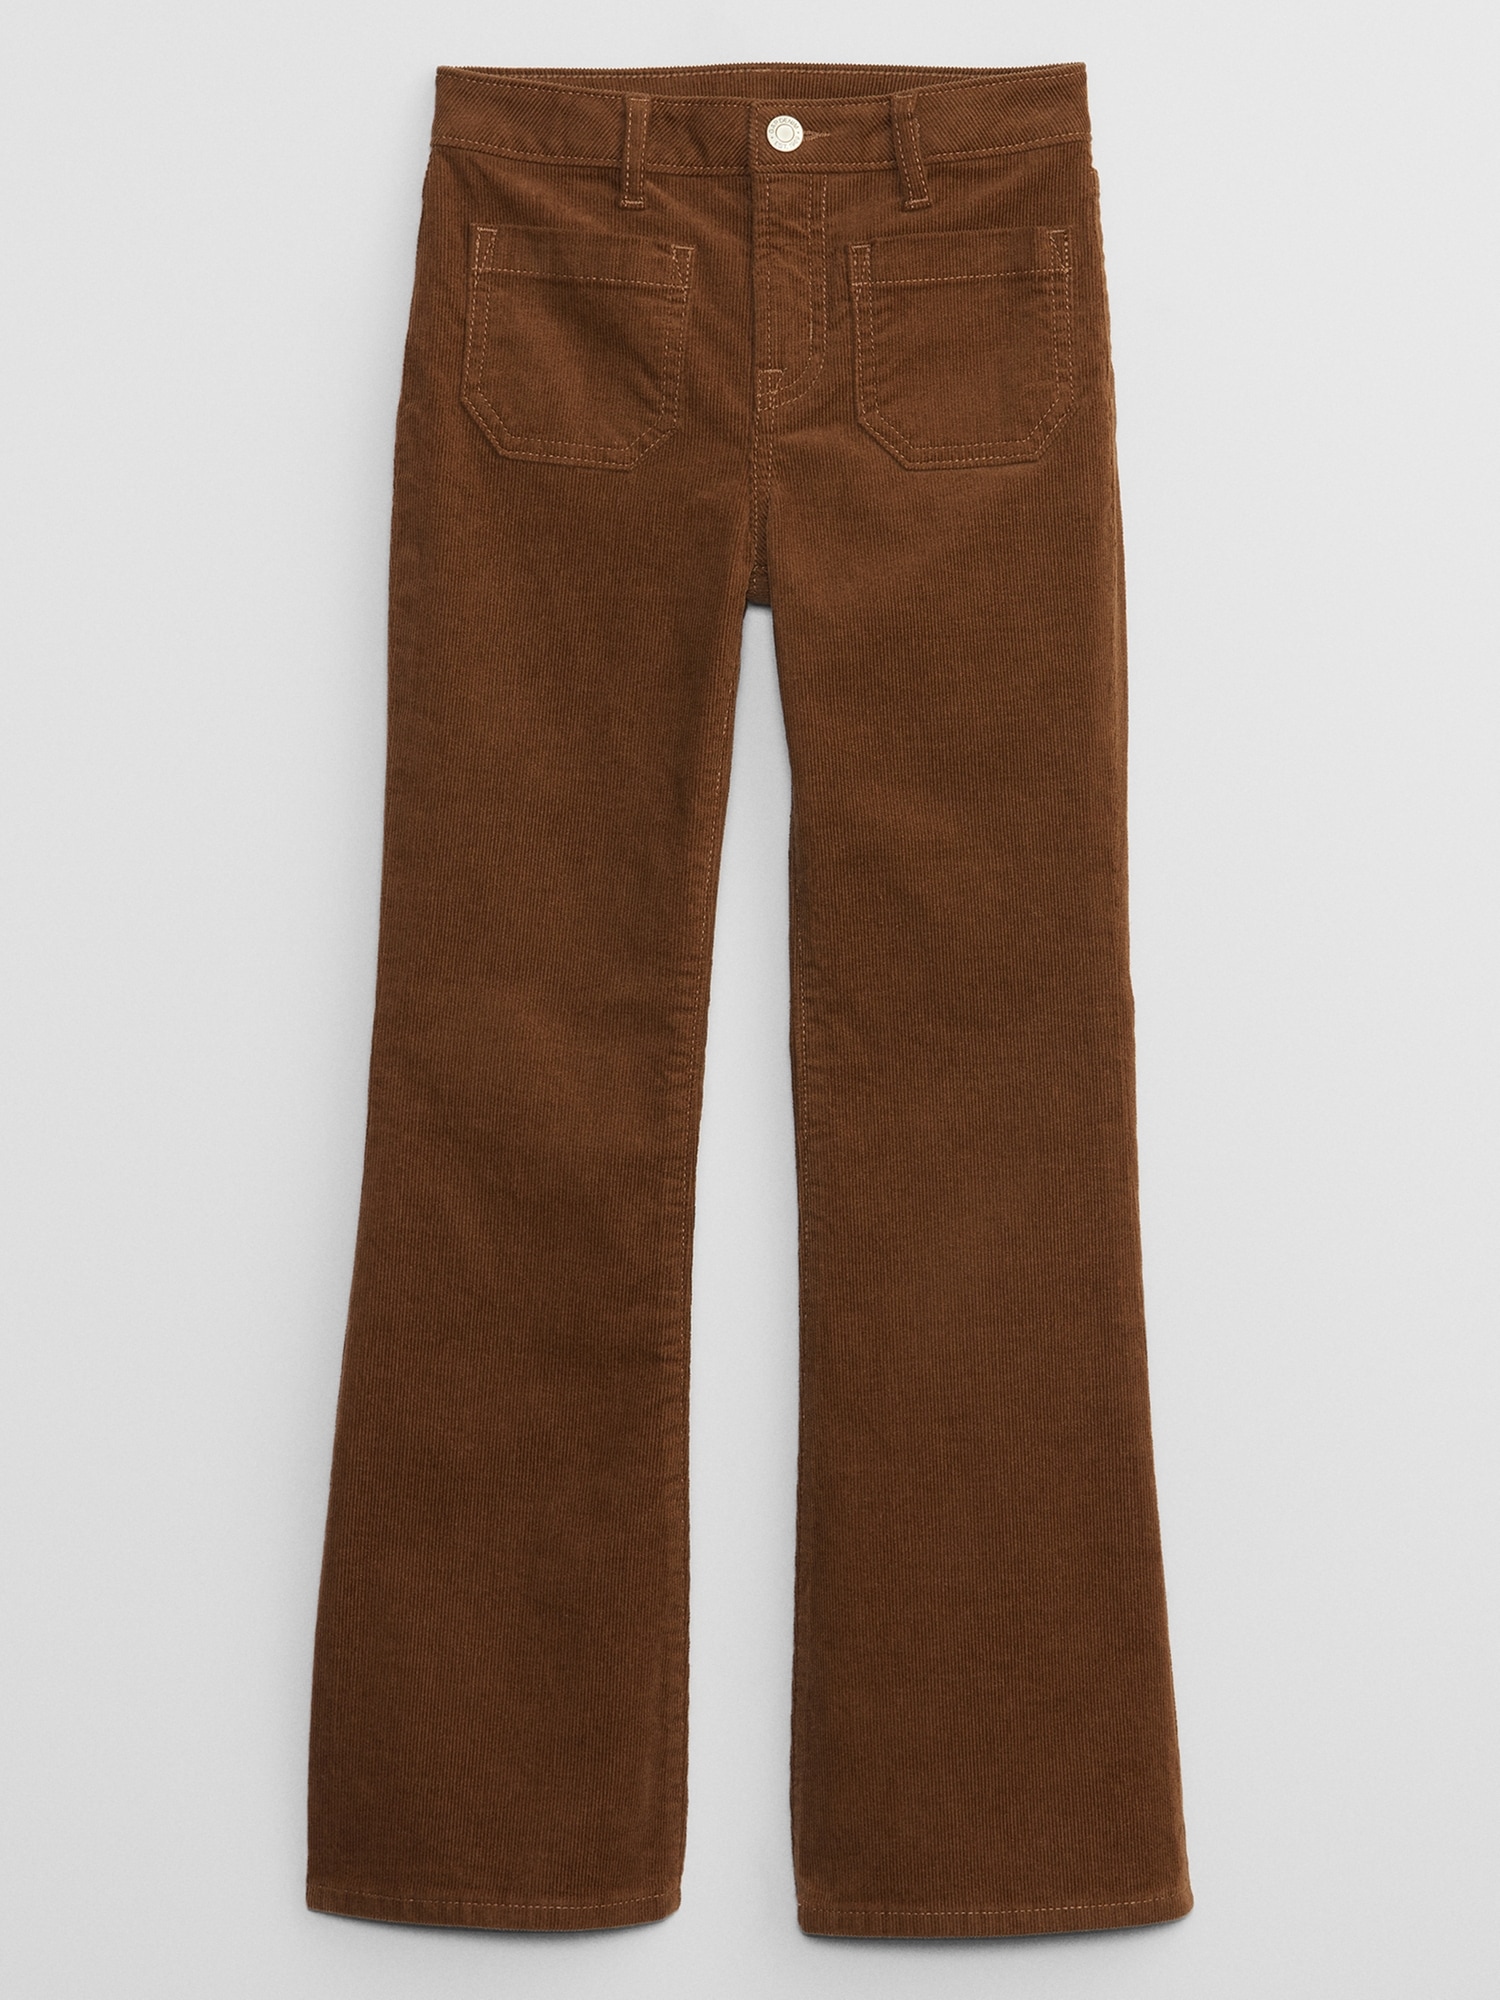 Gap High Rise Corduroy '70s Flare Pants